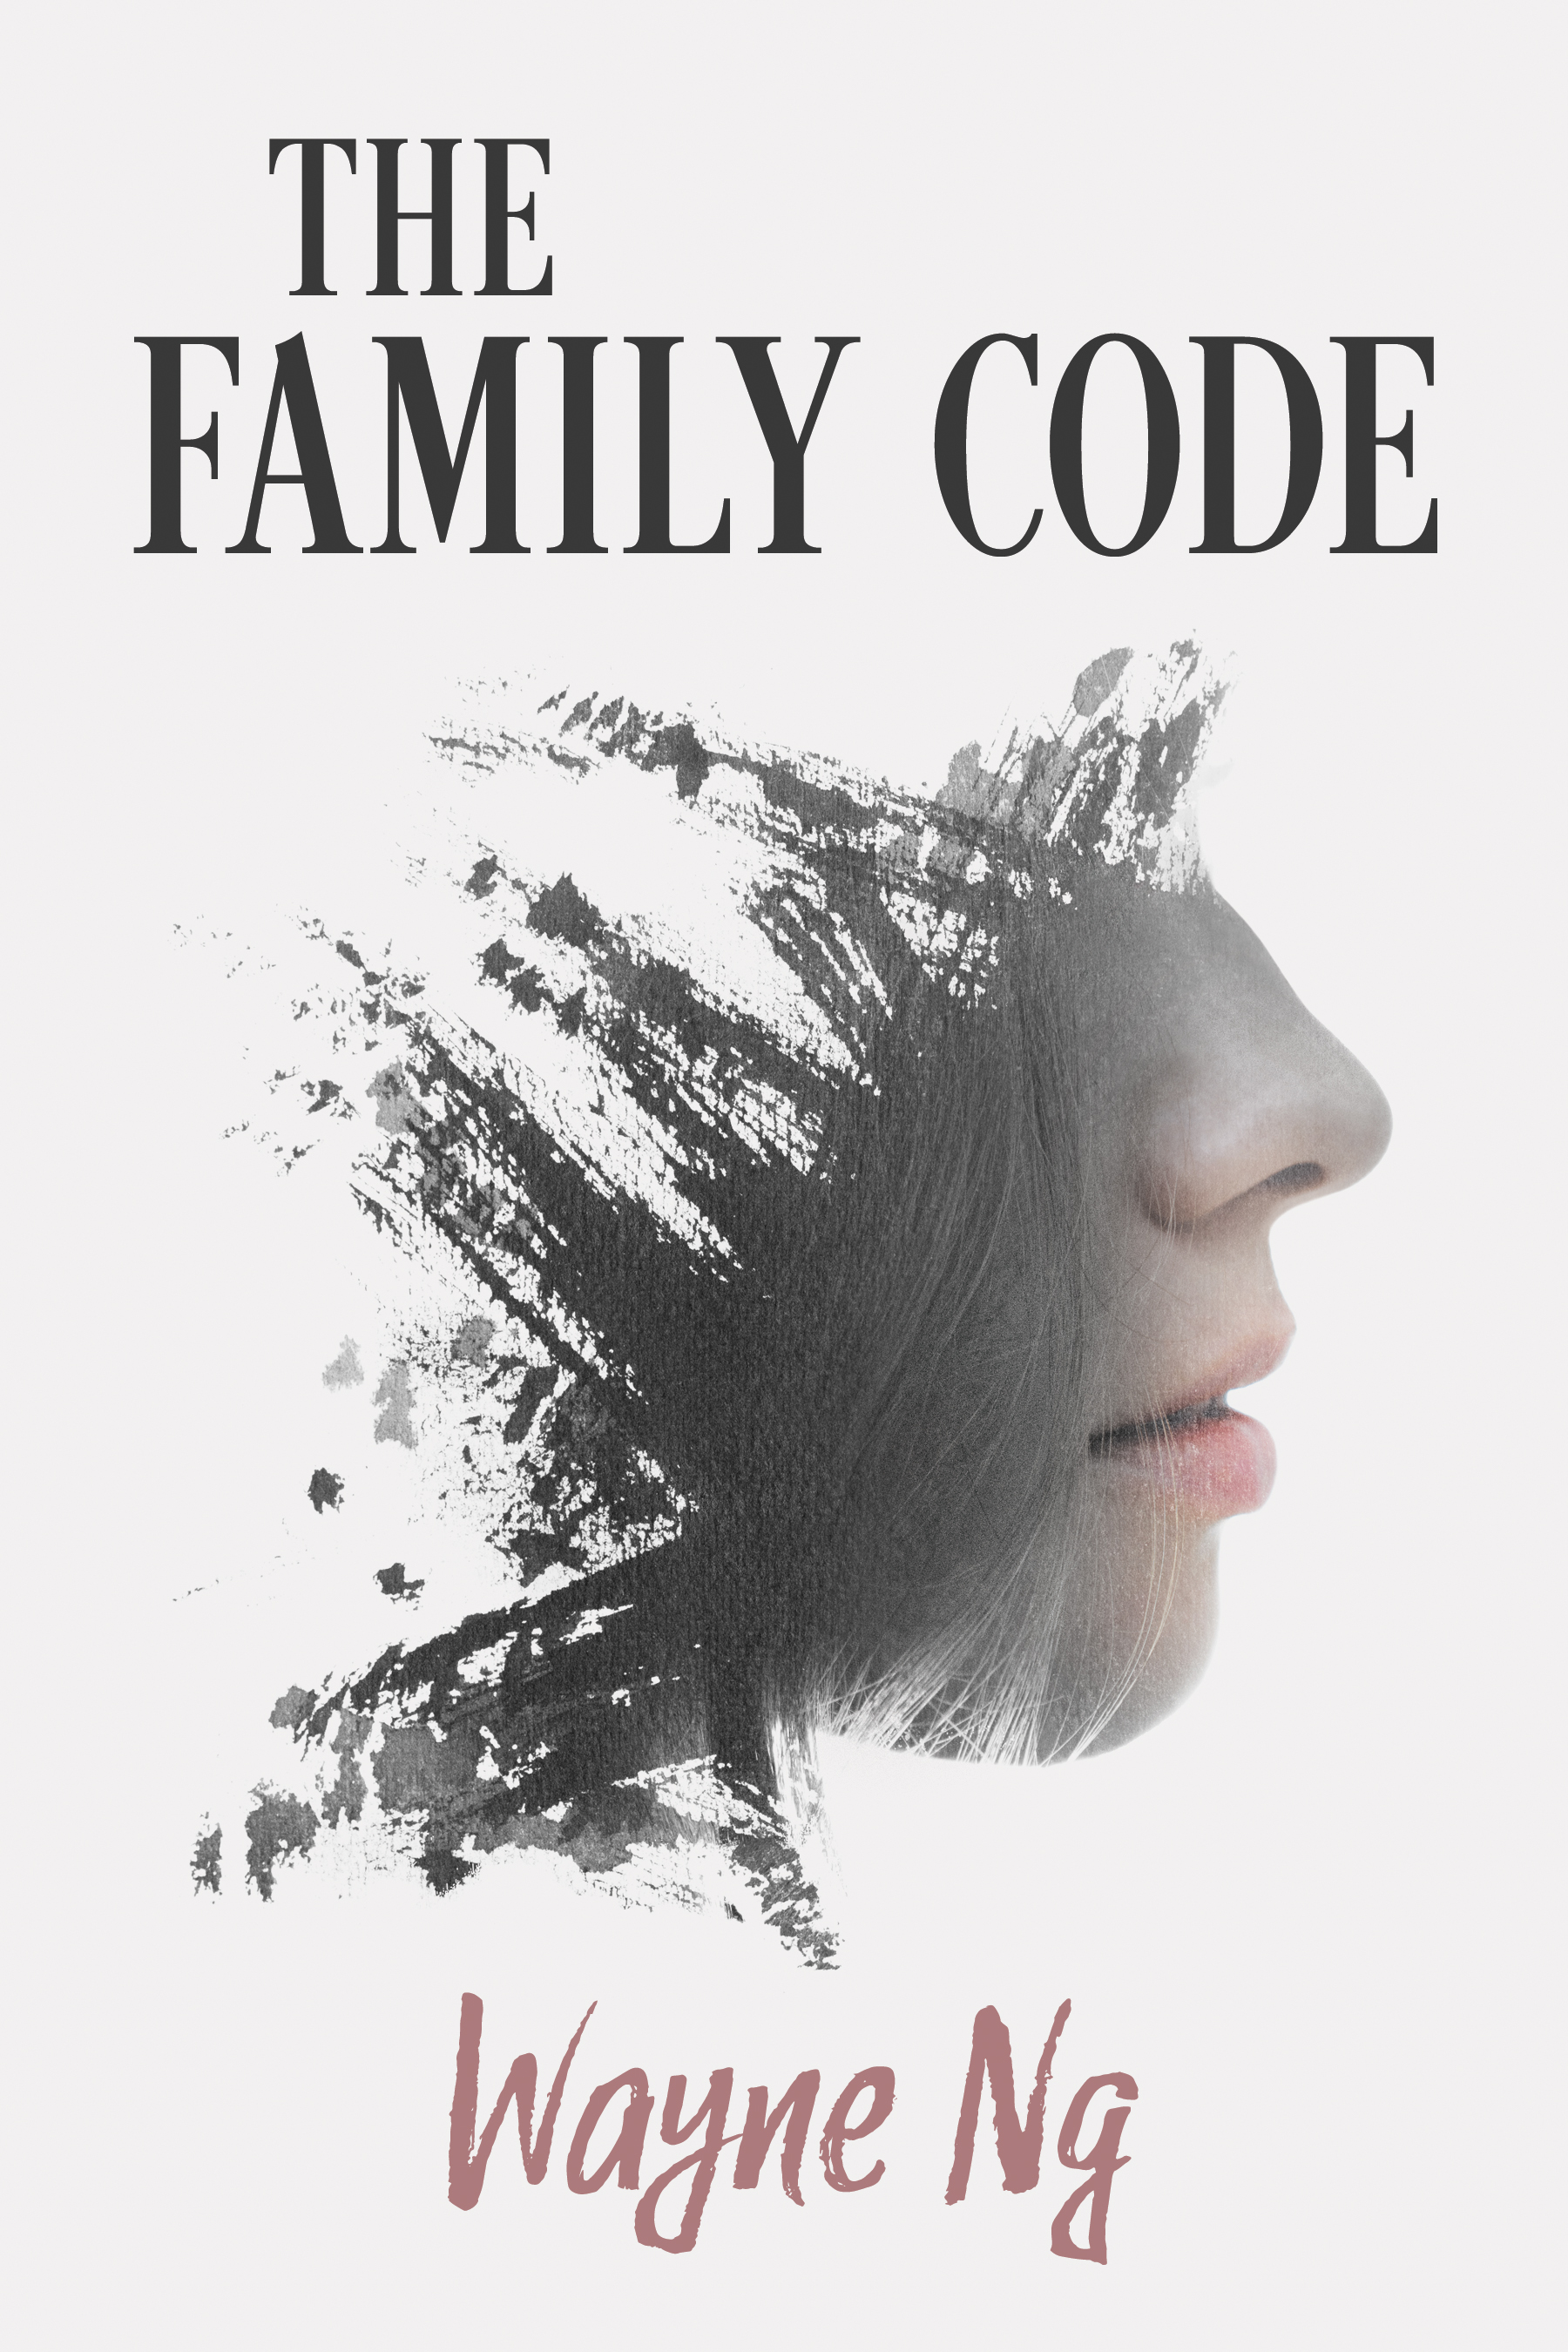 The Family Code by Wayne Ng - Cover